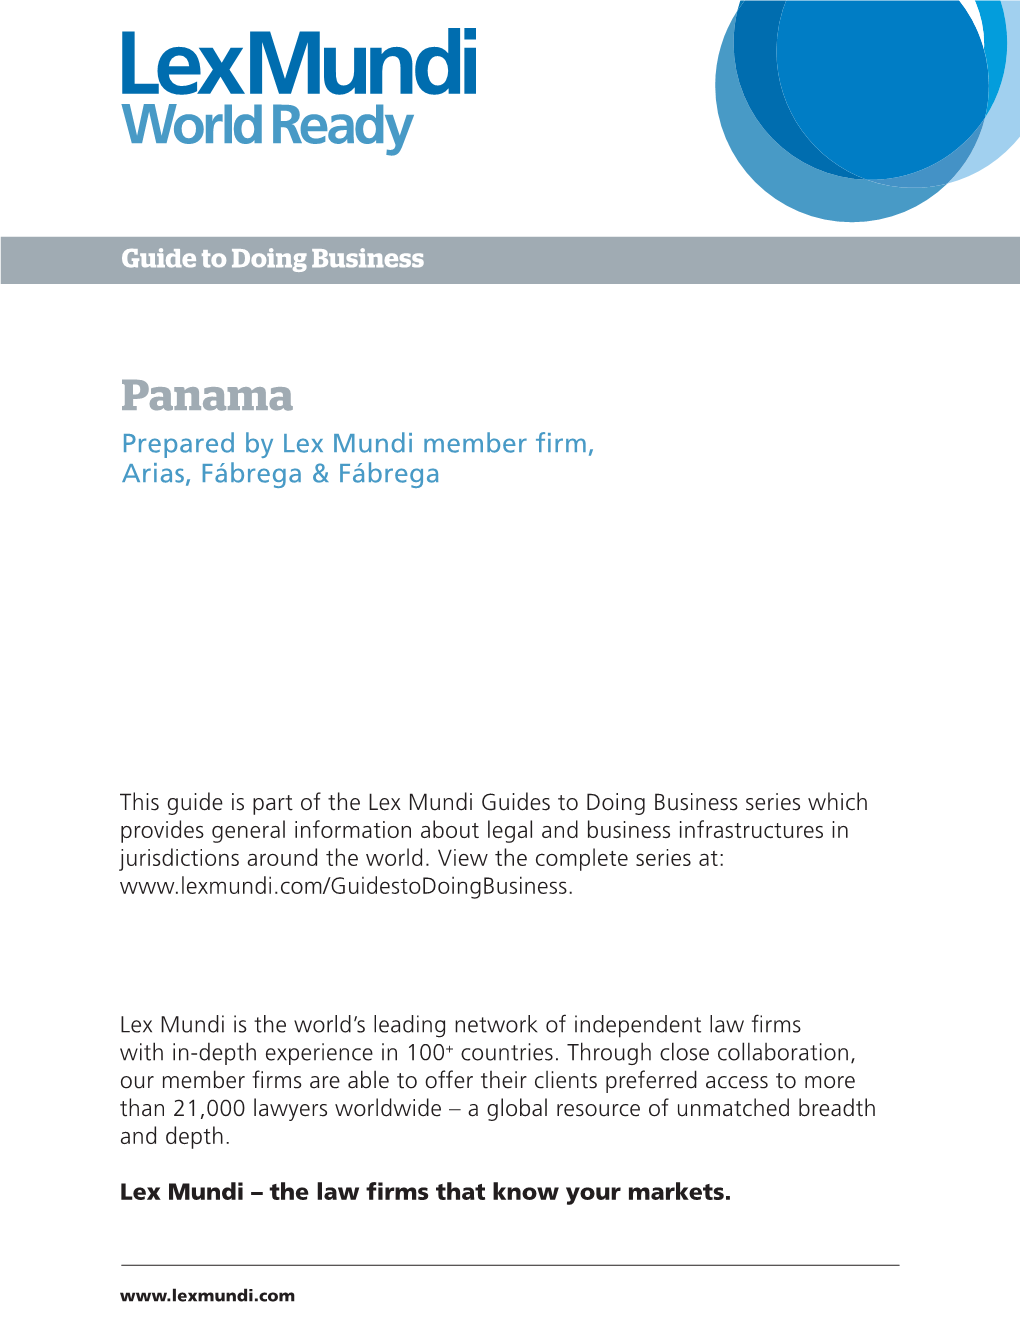 Panama Prepared by Lex Mundi Member Firm, Arias, Fábrega & Fábrega